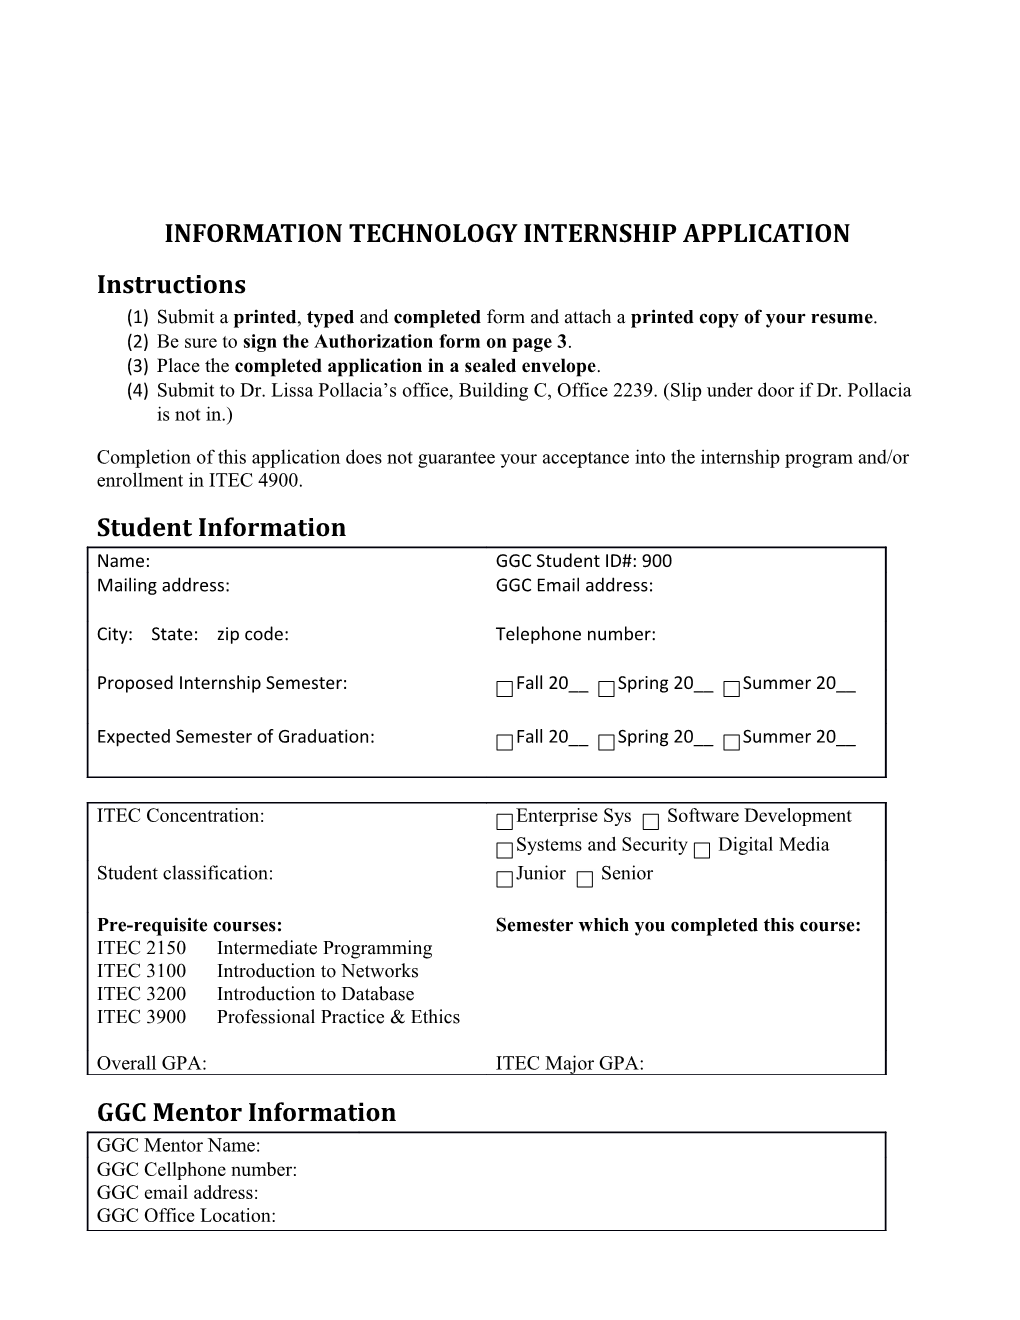 Application for Biology Internship - Student